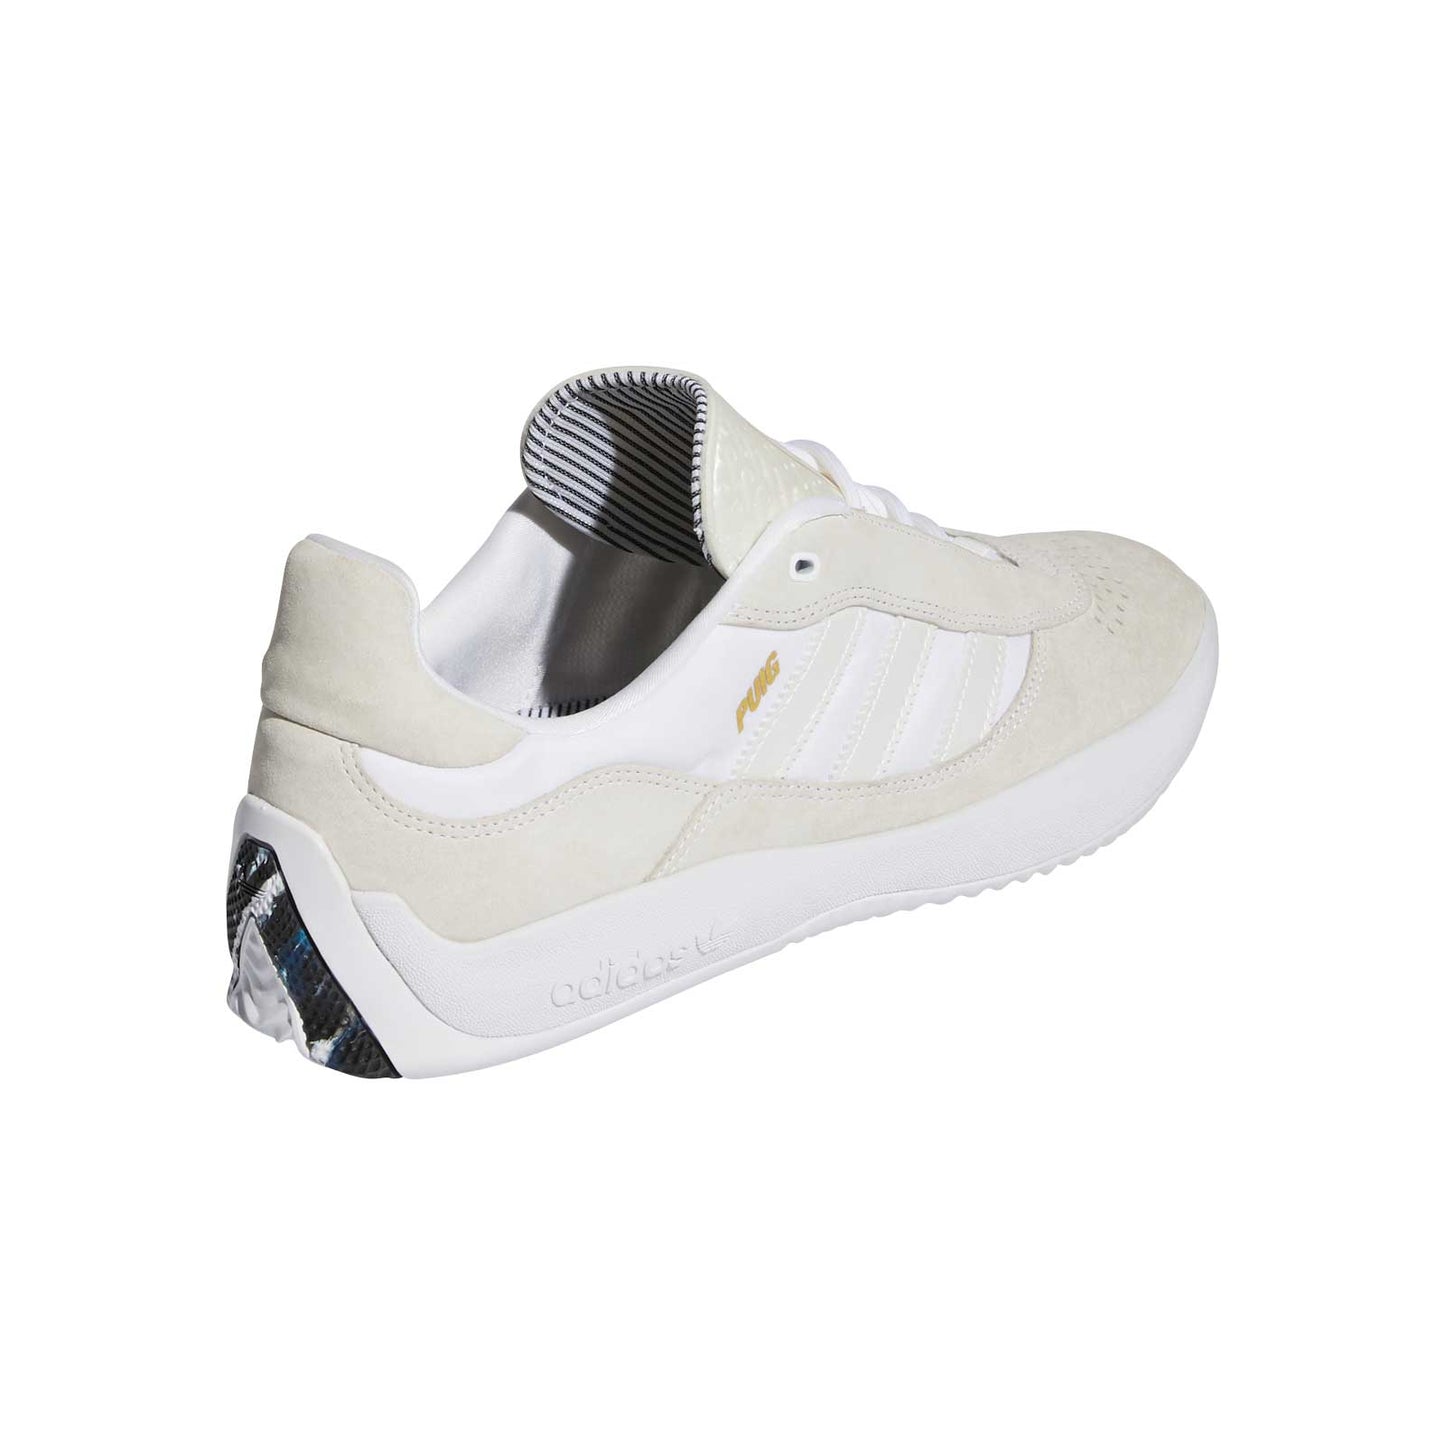 Adidas Puig, ftwr white/ftwr white/core black - Tiki Room Skateboards - 6